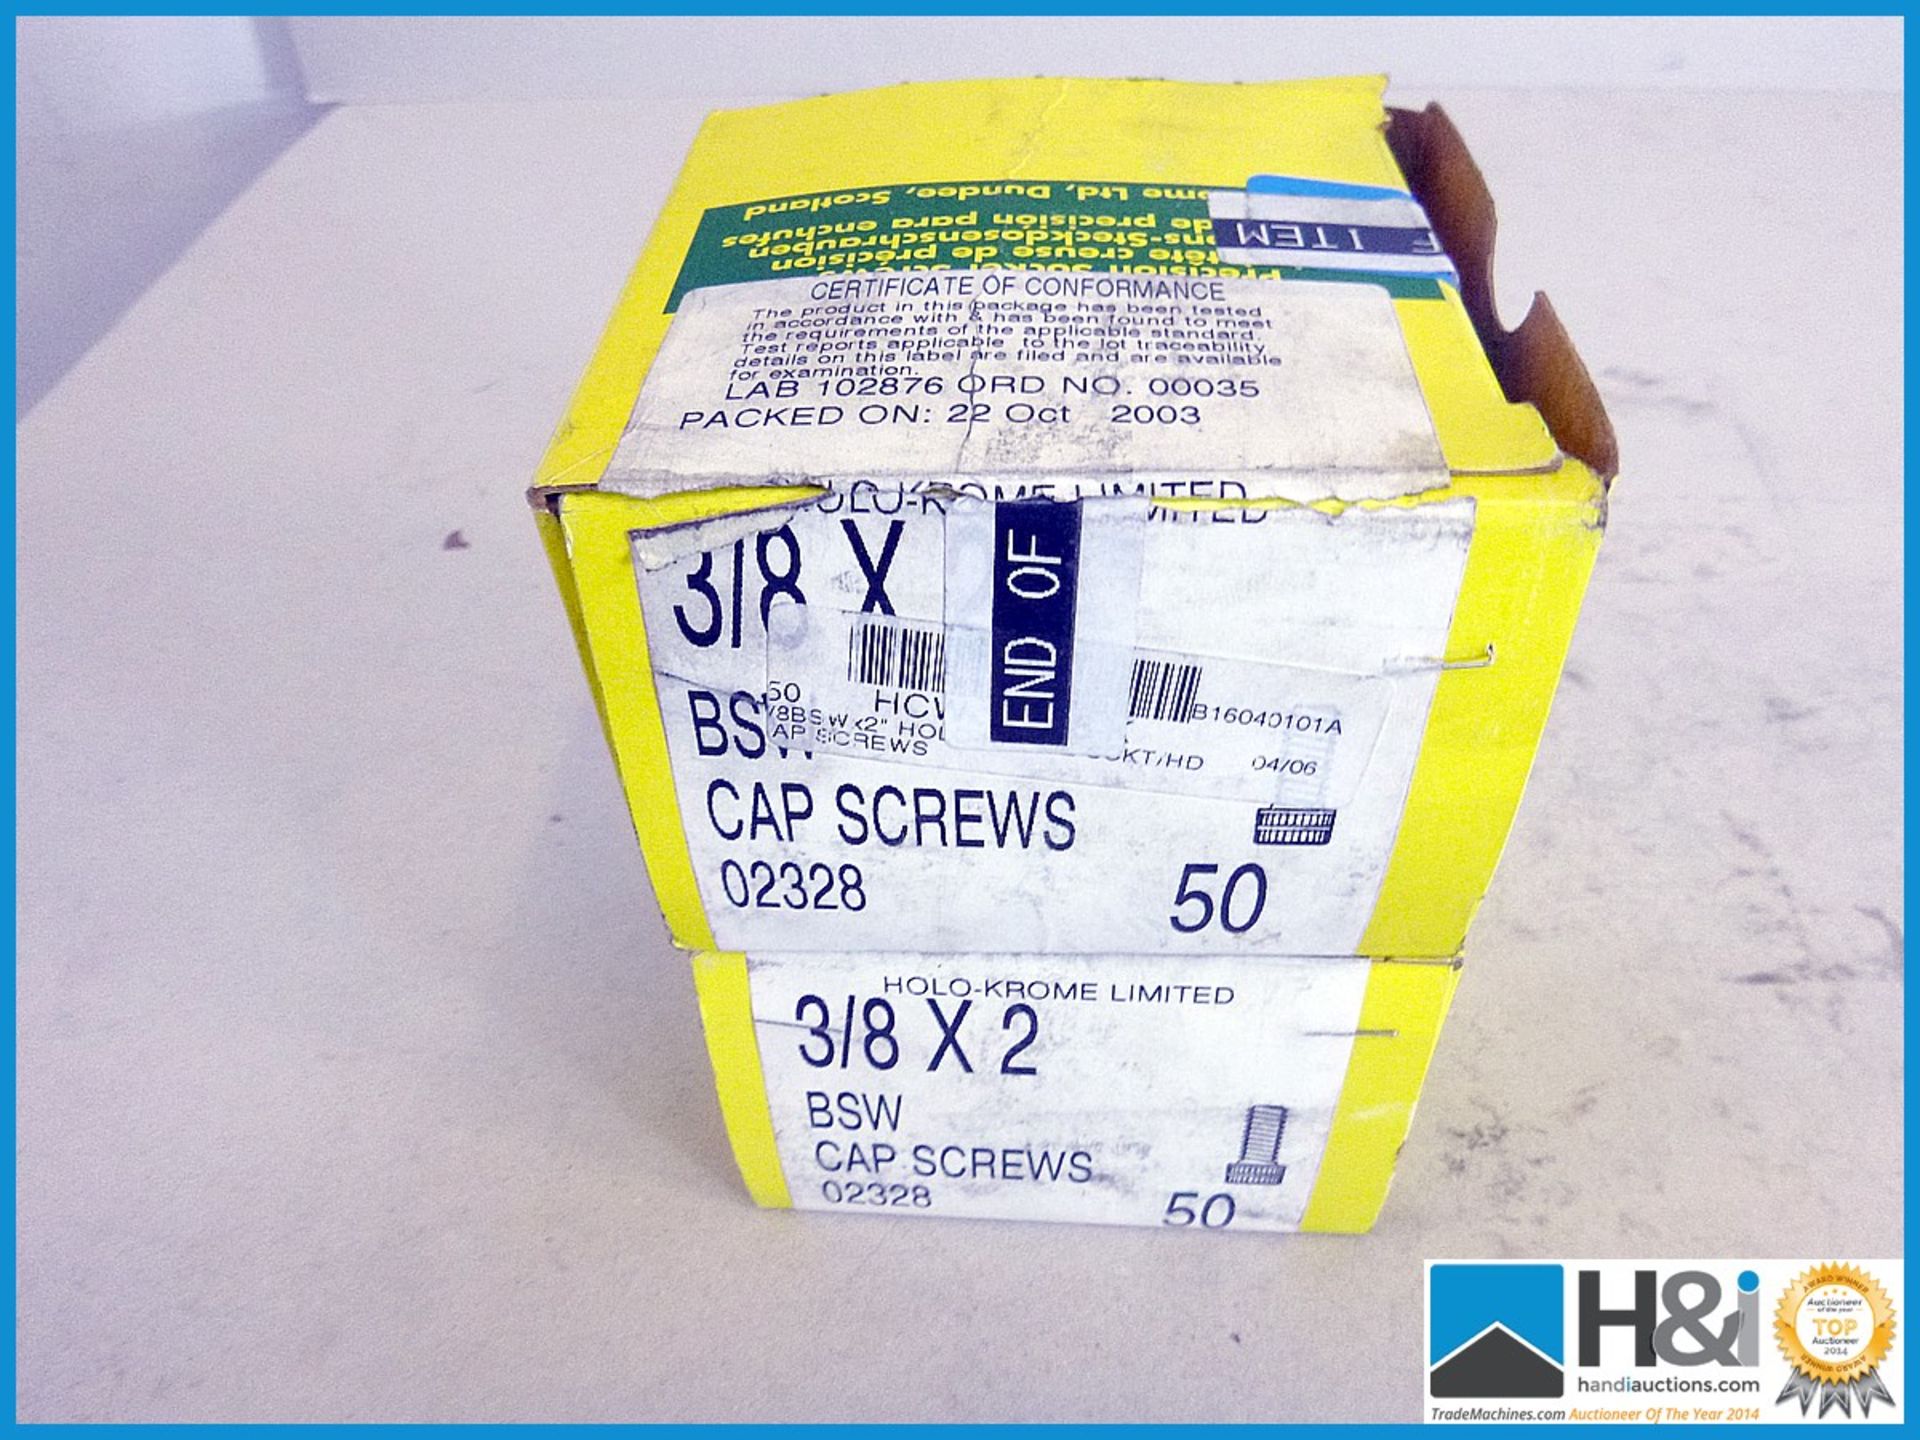 3/8BSWx2" HOLO-KROME SCKT/HD CAP SCREWS. X2 boxes. Appraisal: New, unused in original packaging. - Image 2 of 2